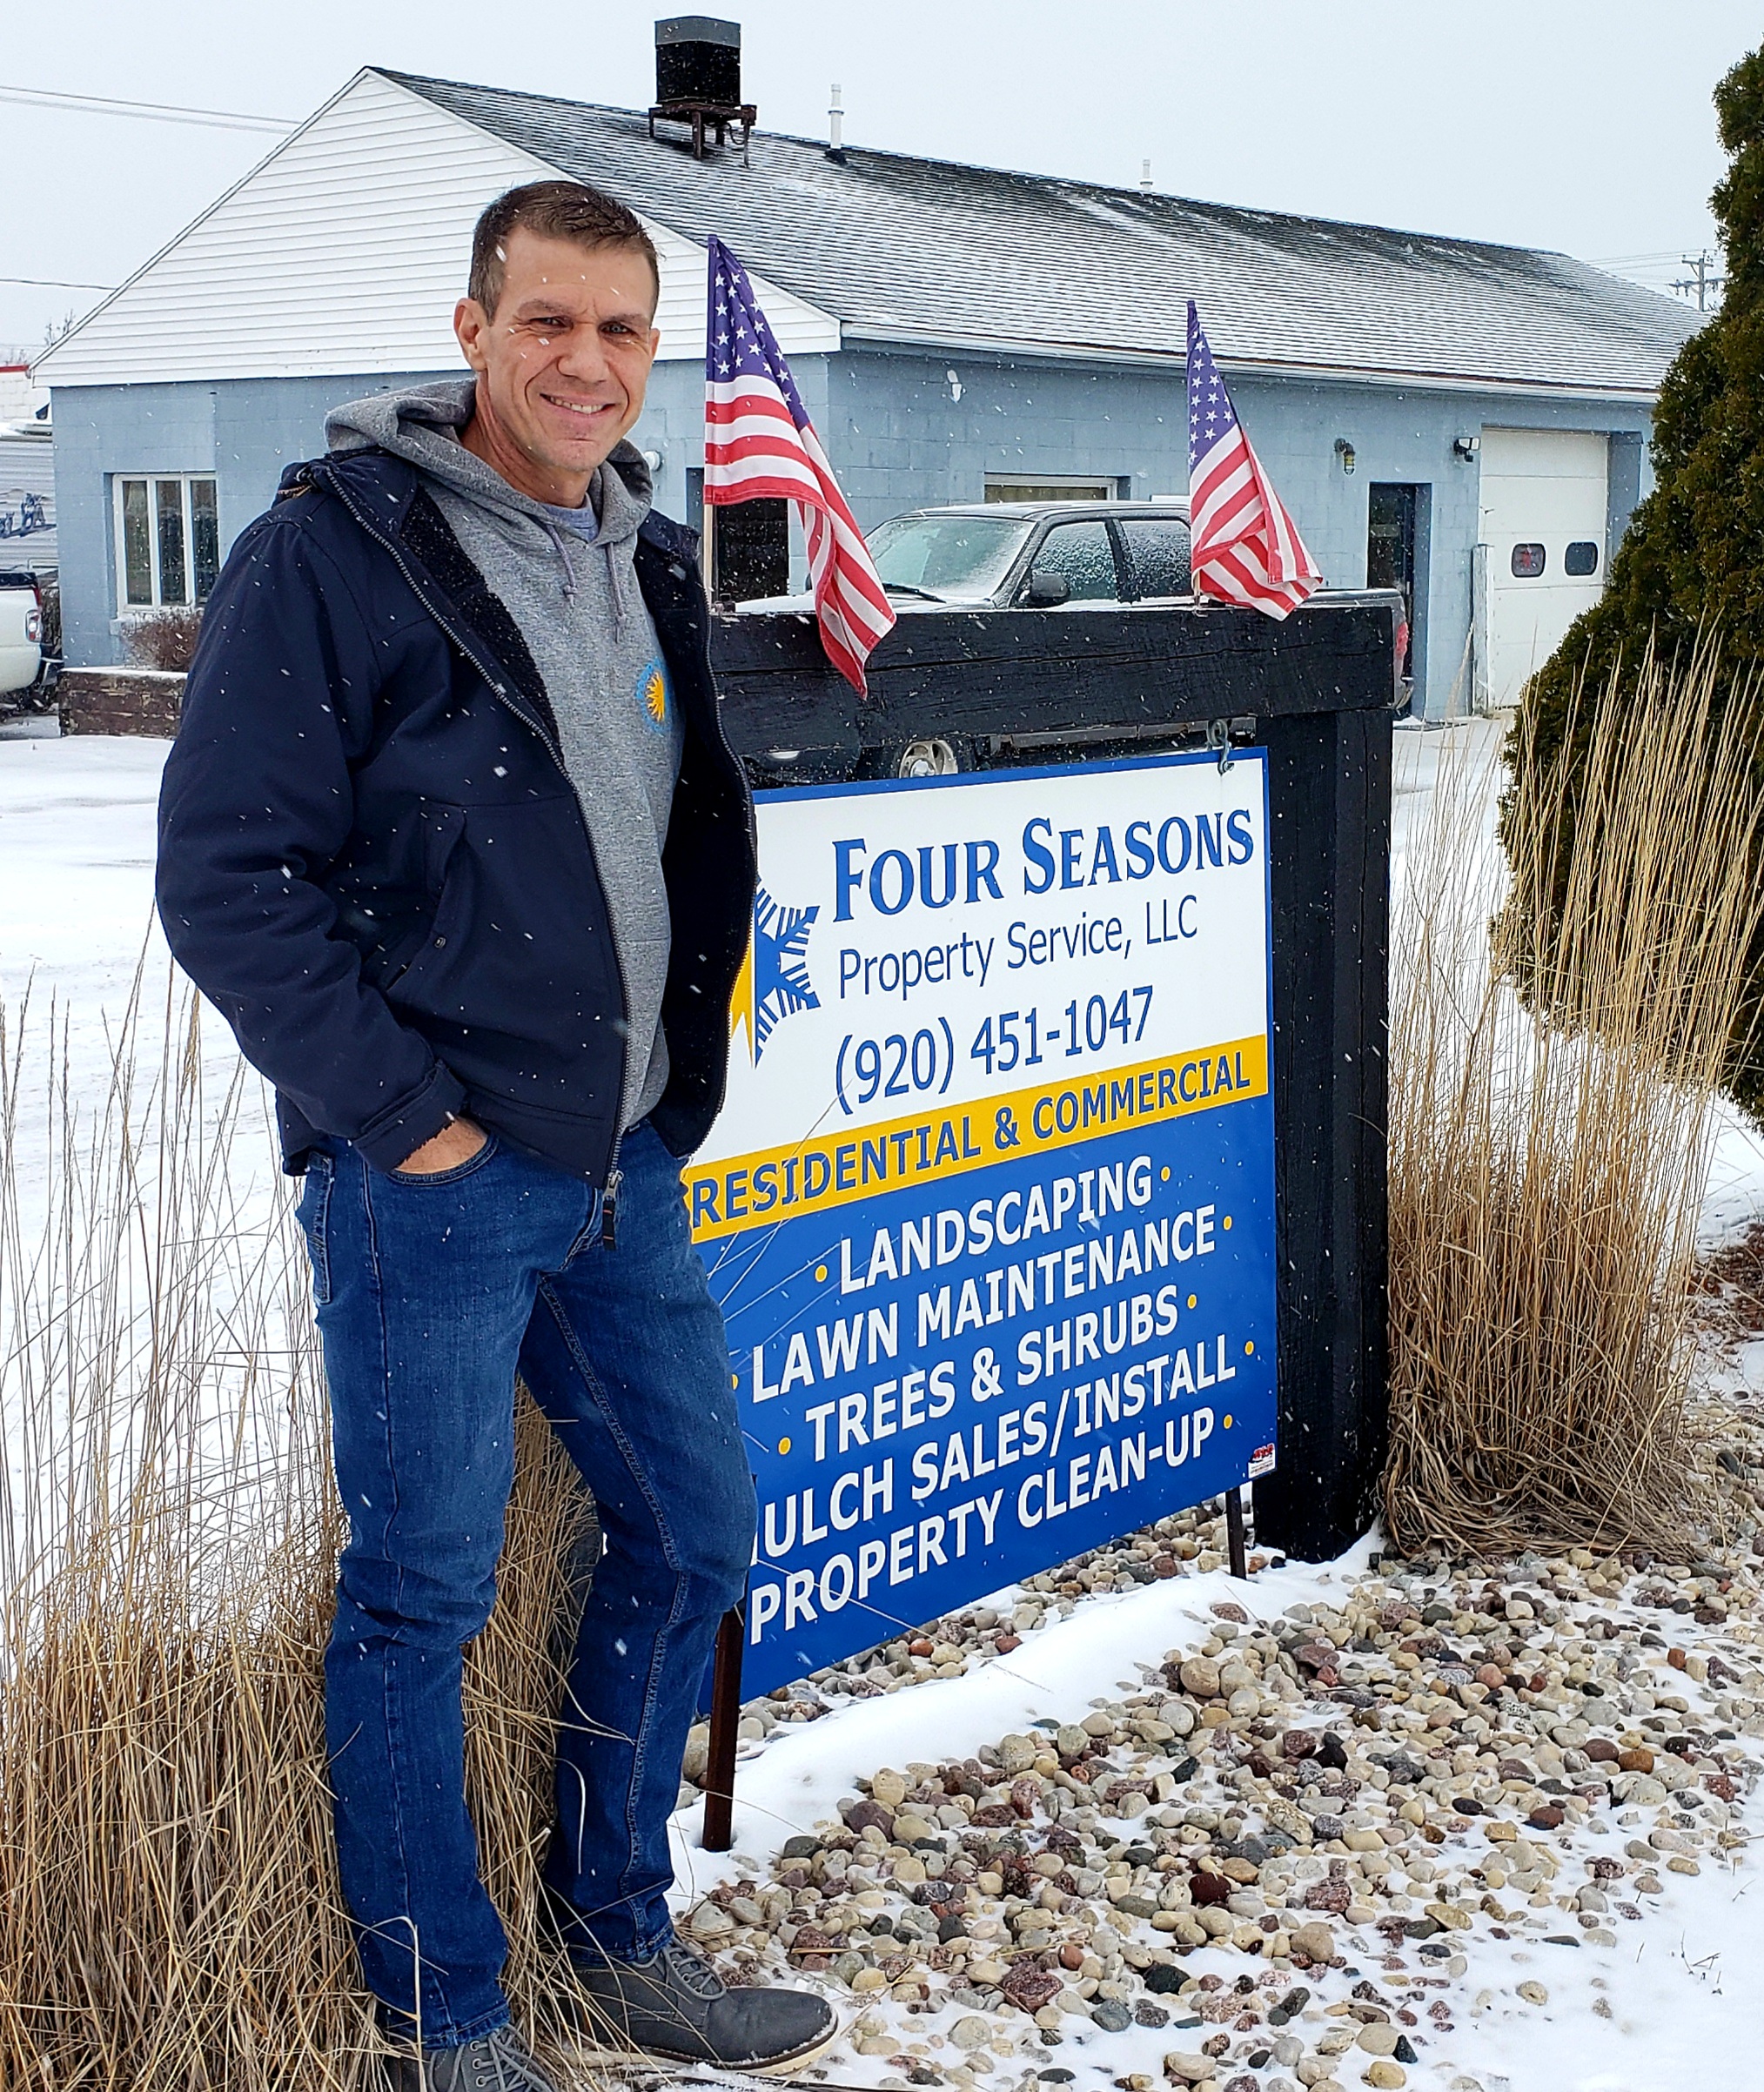 Matthew Dross of Four Seasons Property Service, LLC